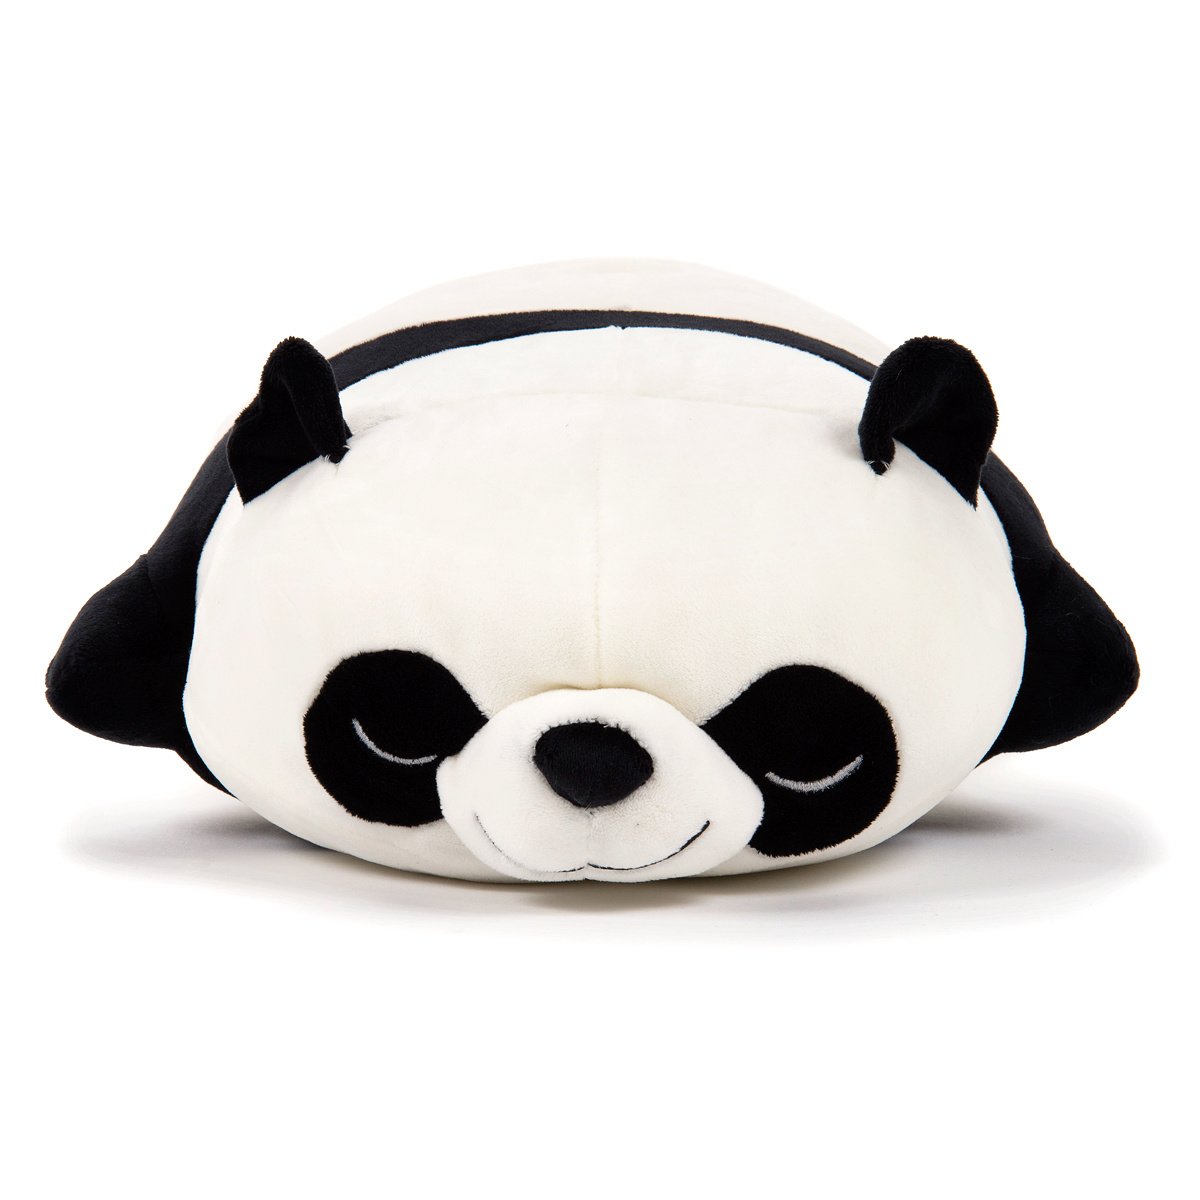 Super Soft Panda Plush Doll Pillow Big Size 20 Inches